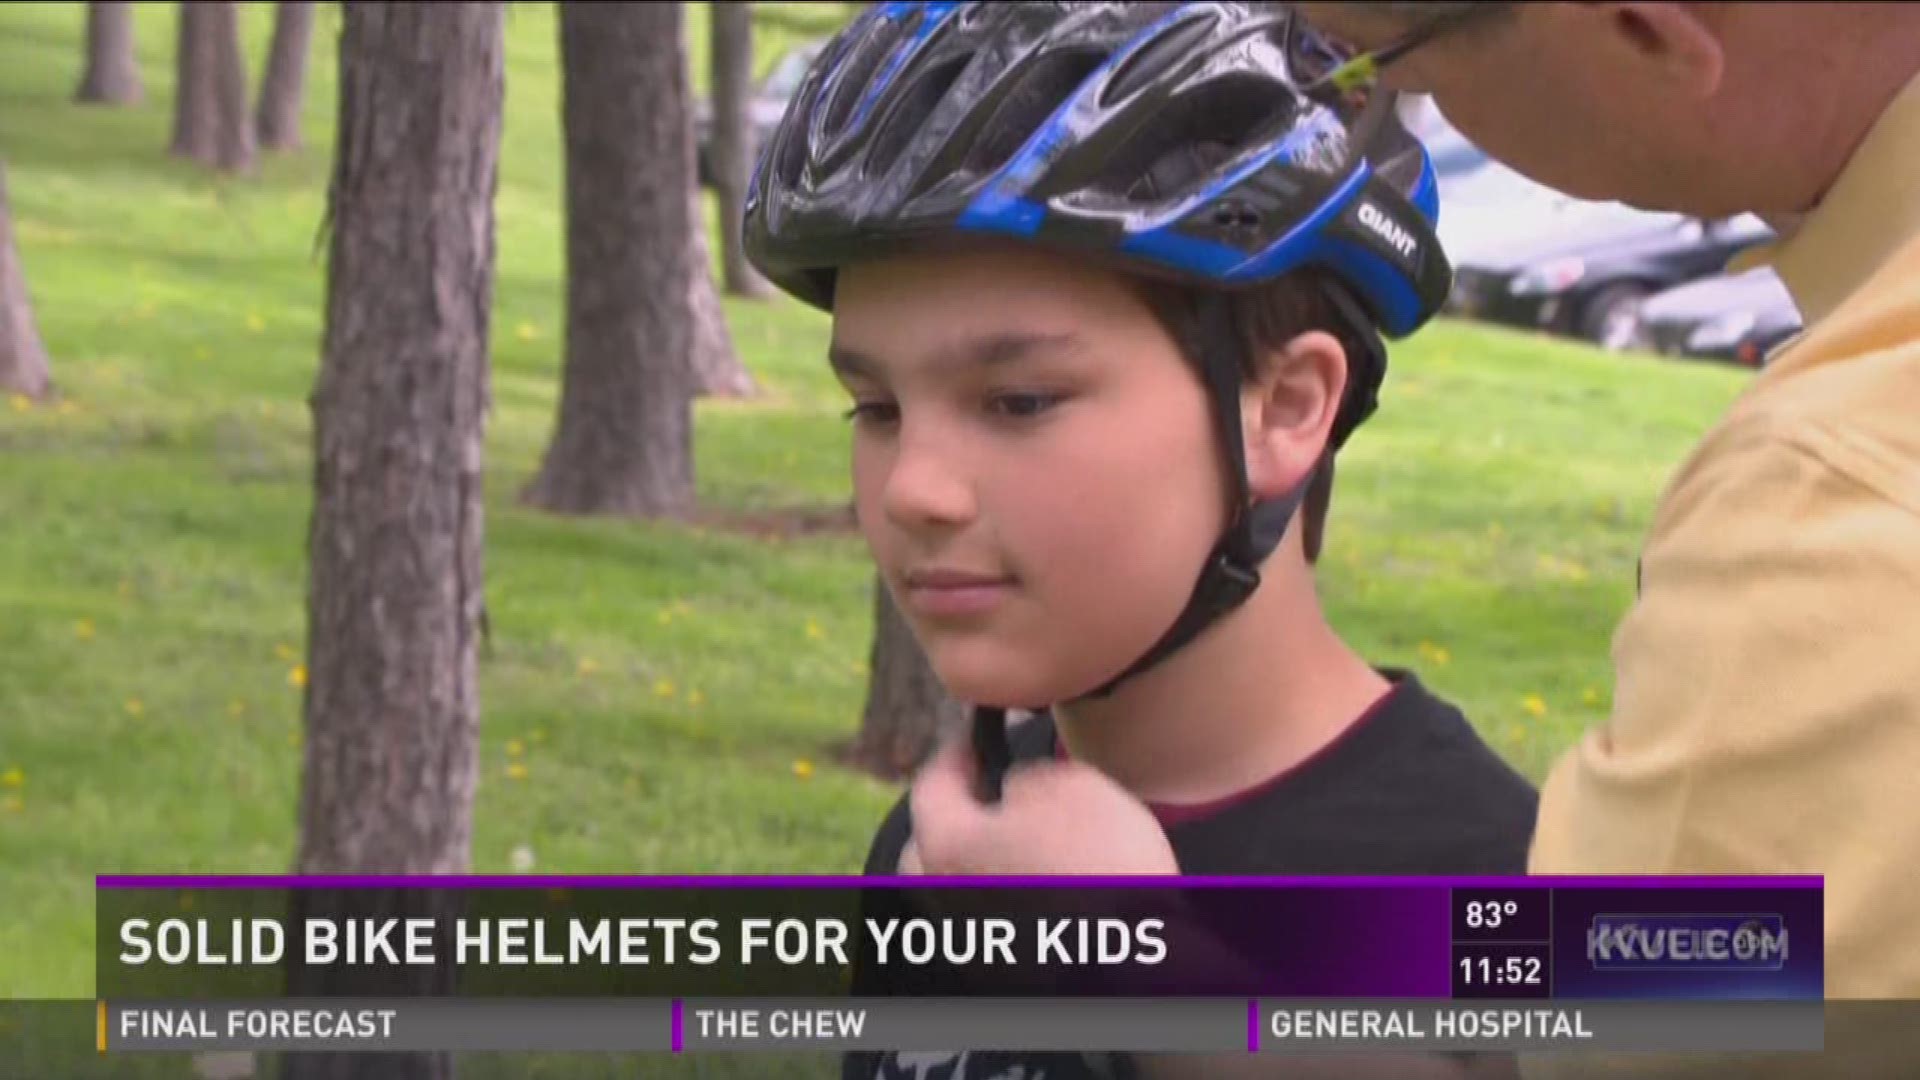 Solid bike helmets for your kids